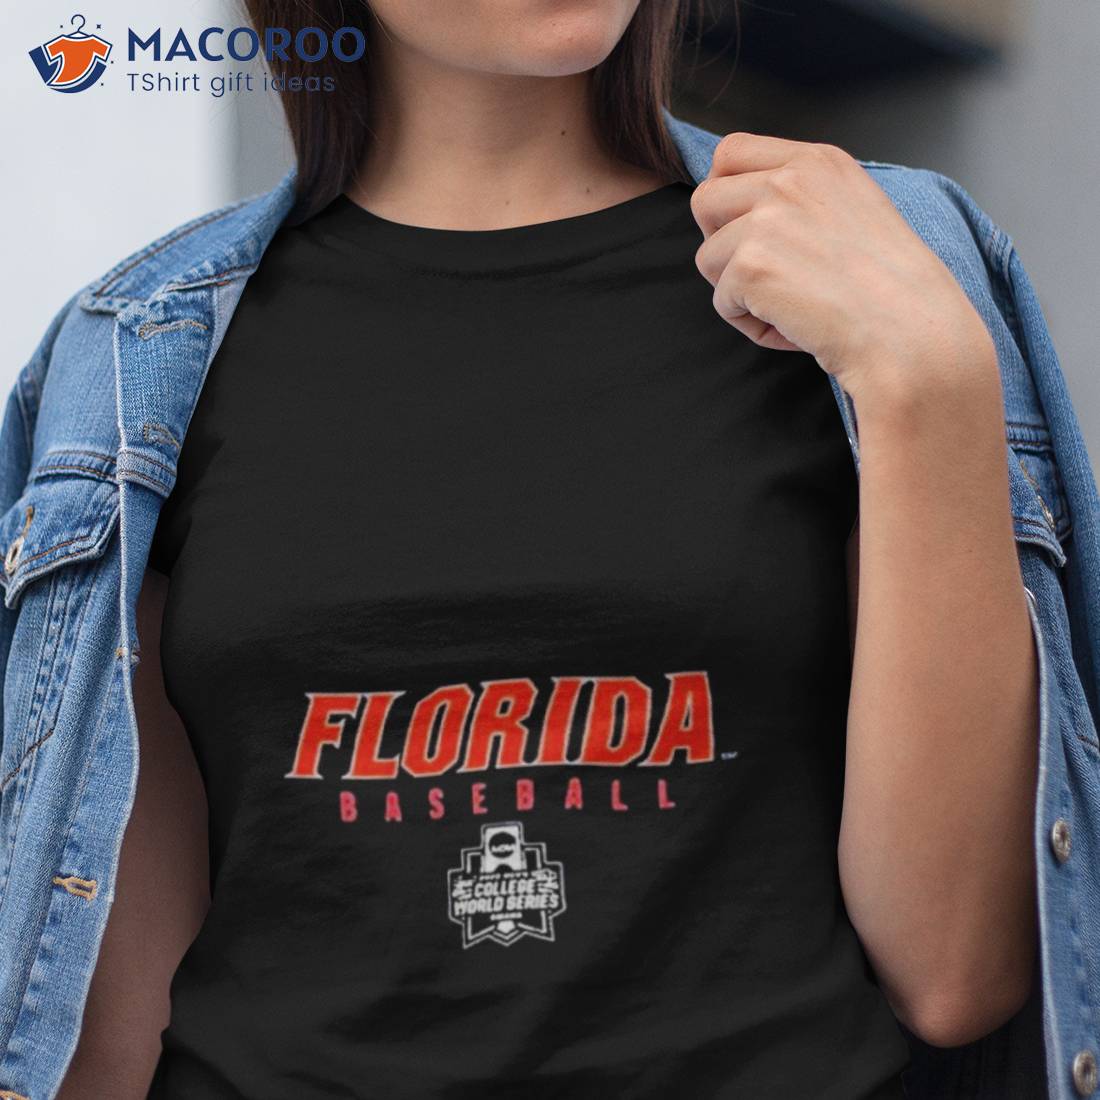  Florida Gators College World Series 2023 Baseball CWS Orange T- Shirt : Sports & Outdoors